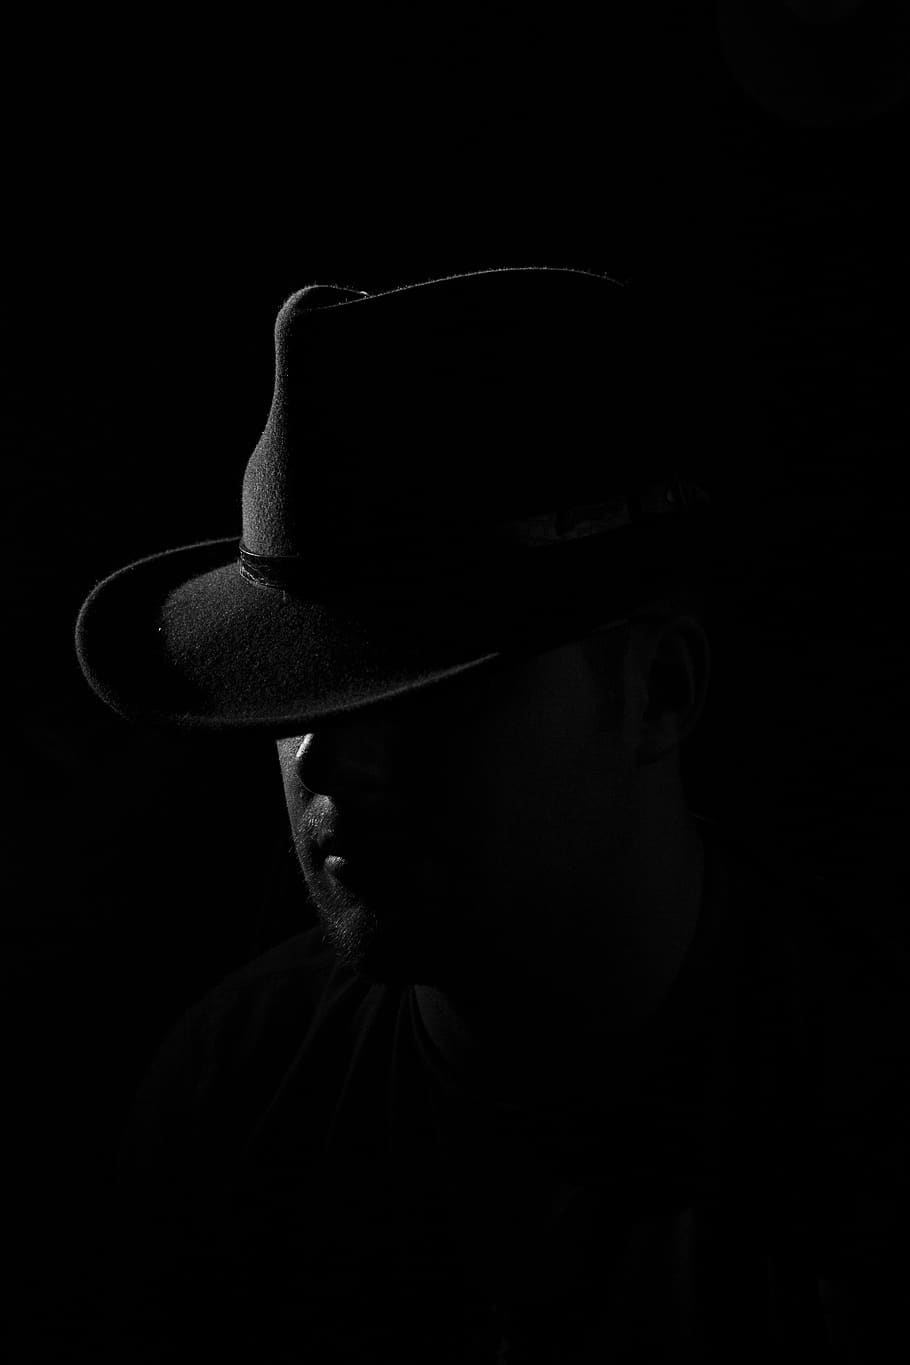 man wearing black hat, apparel, clothing, person, human, sun hat